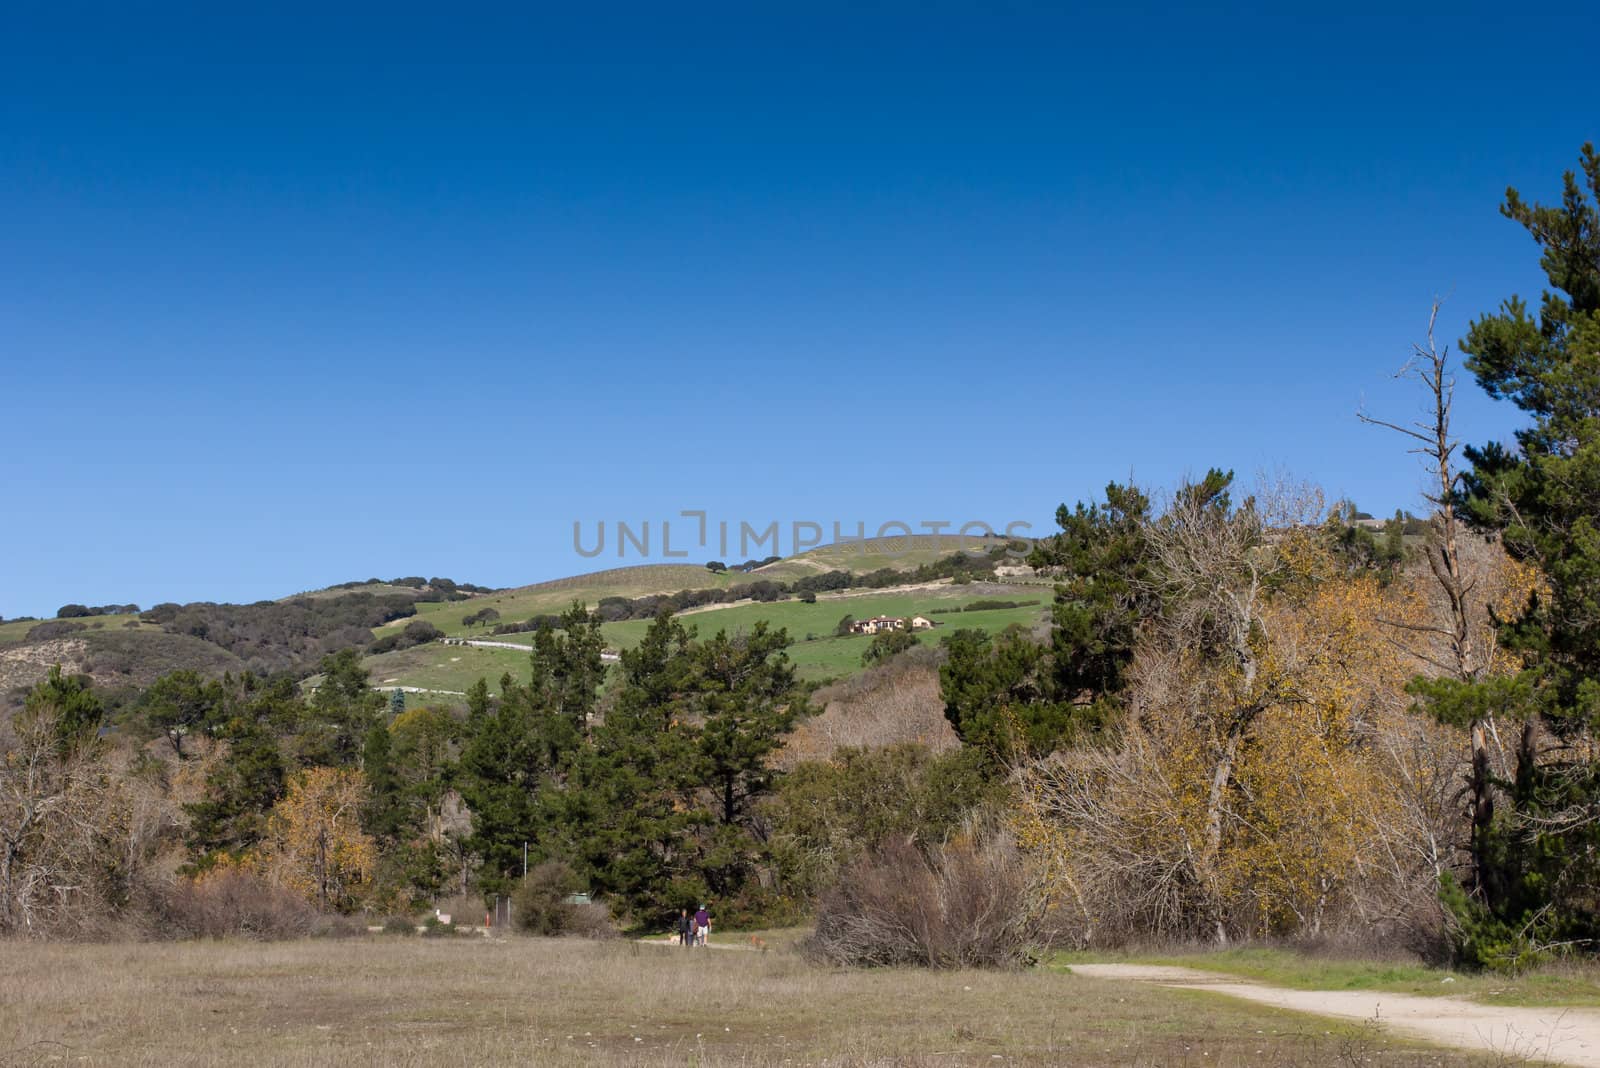 Hills Overlooking Garland Ranch Regional Park in Carmel Valley, California.